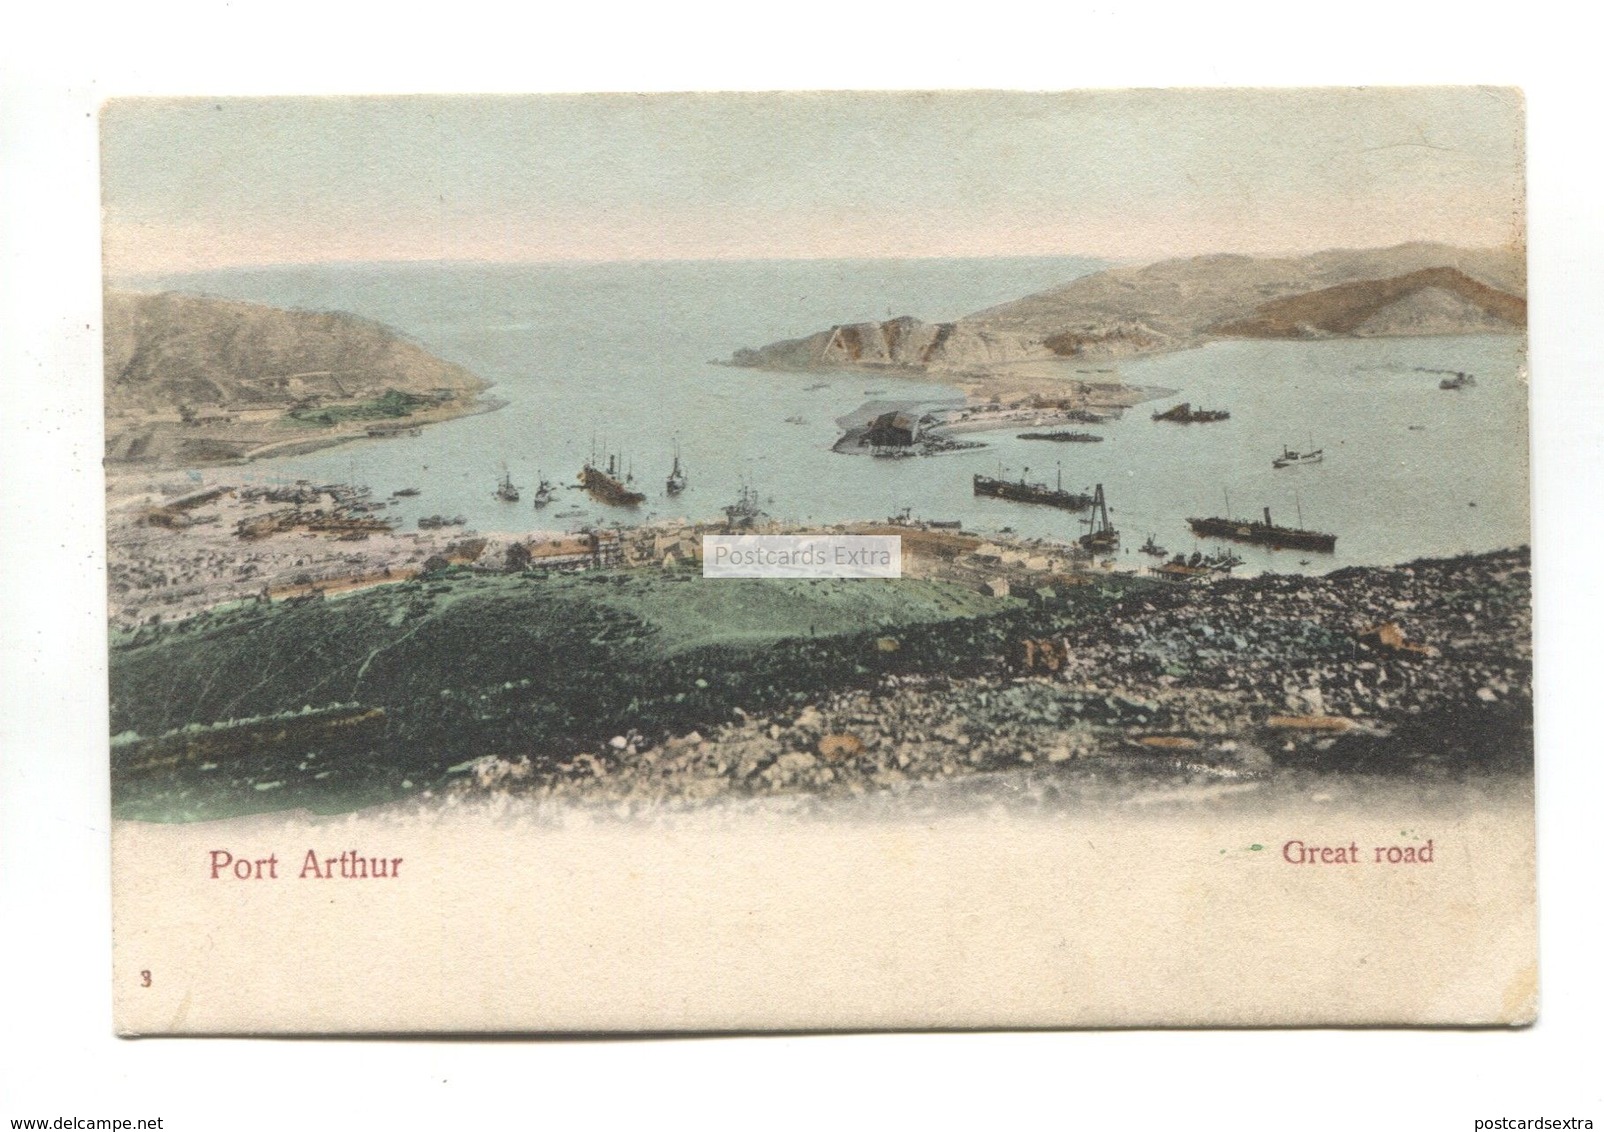 Port Arthur, China - Great Road - Old Postcard - China